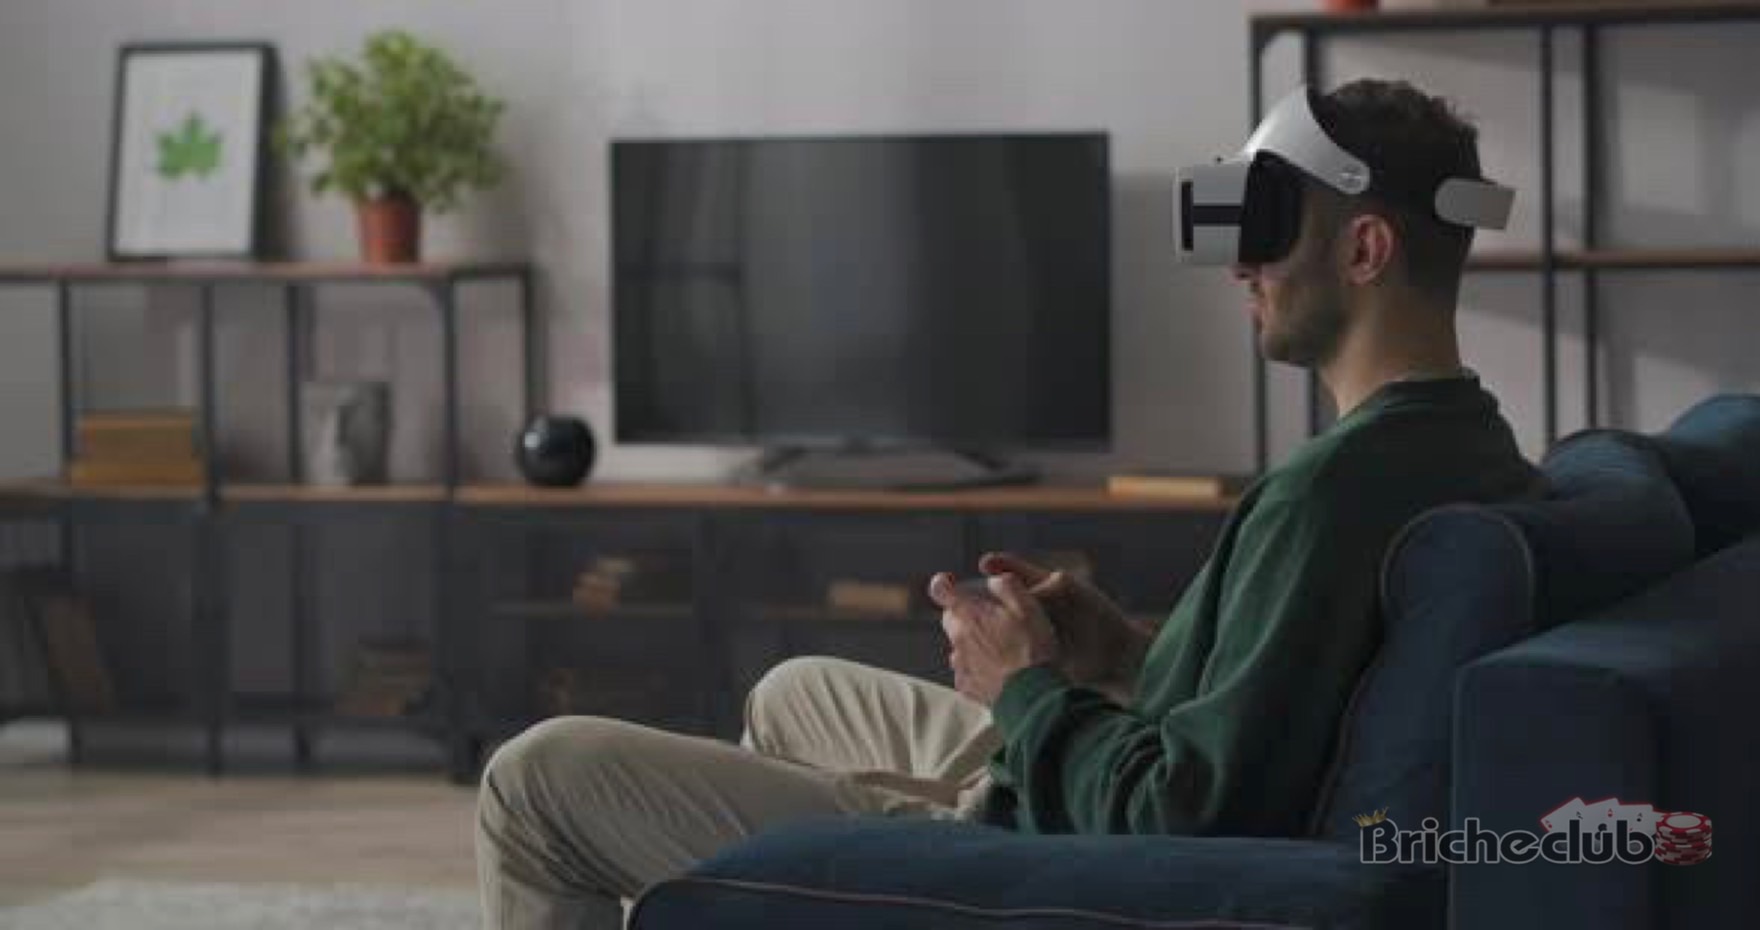 The Virtual Reality Computer Games Presence